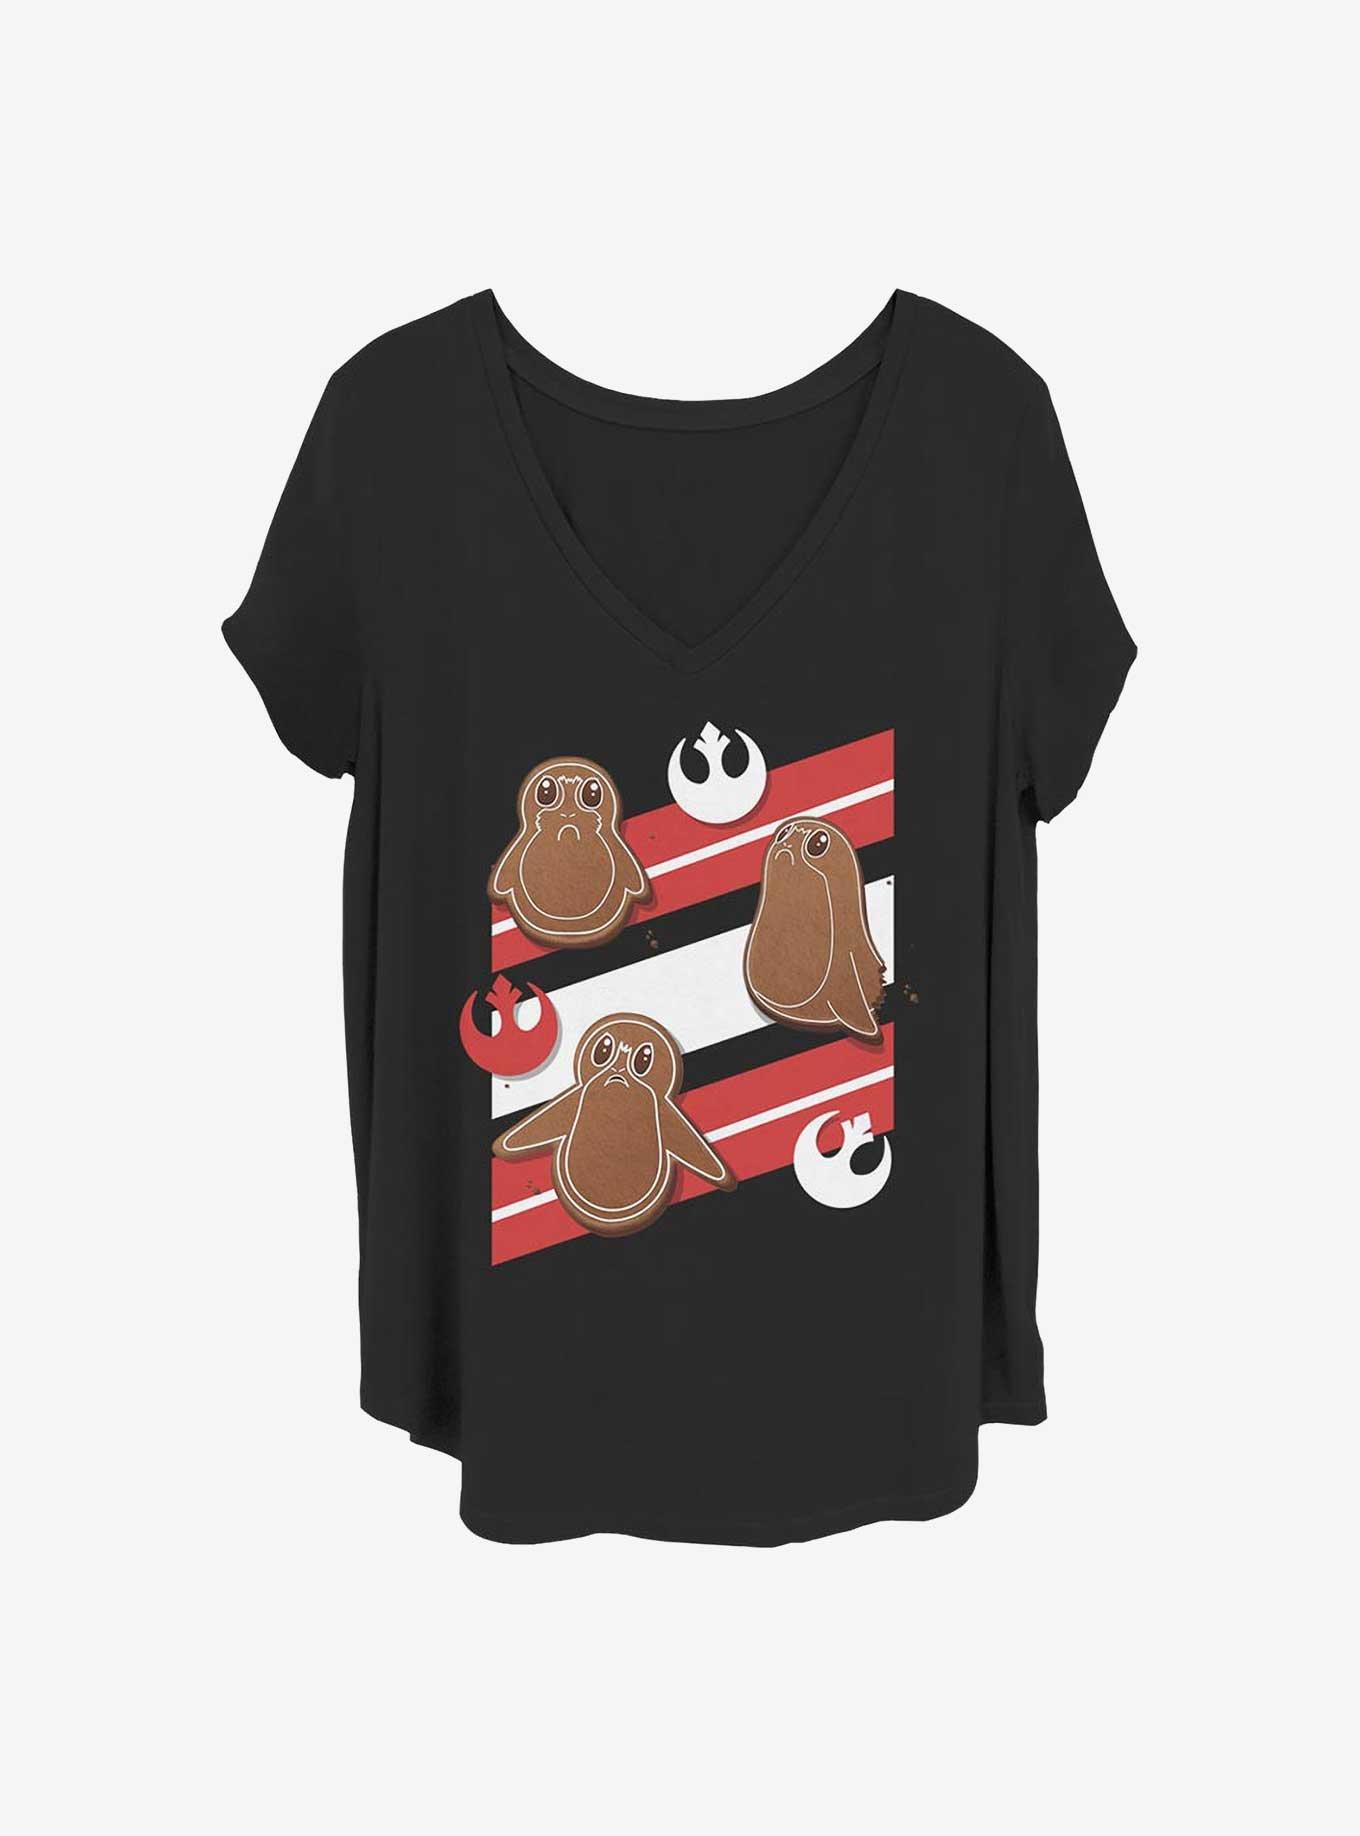 Star Wars: The Last Jedi Ginger Porgs Girls T-Shirt Plus